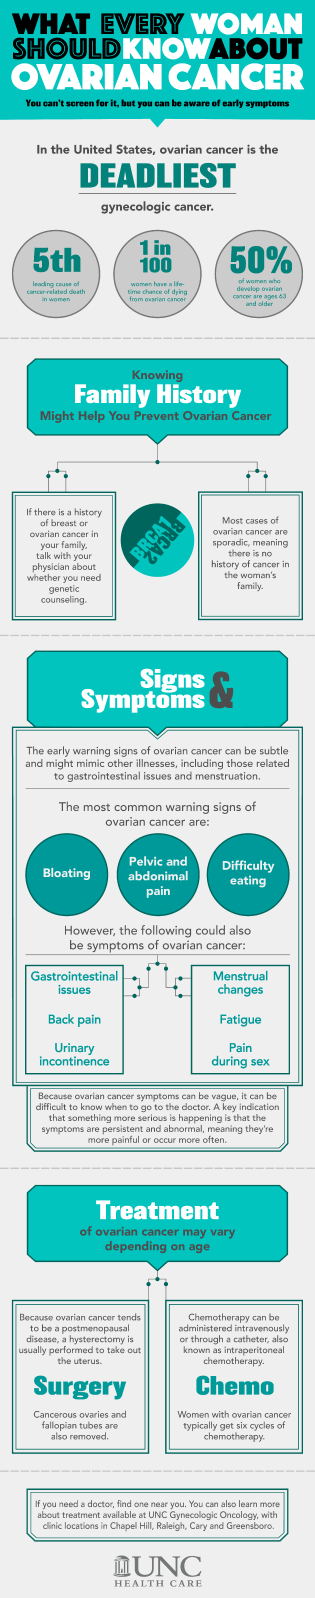 Ovarian Symptoms infographic